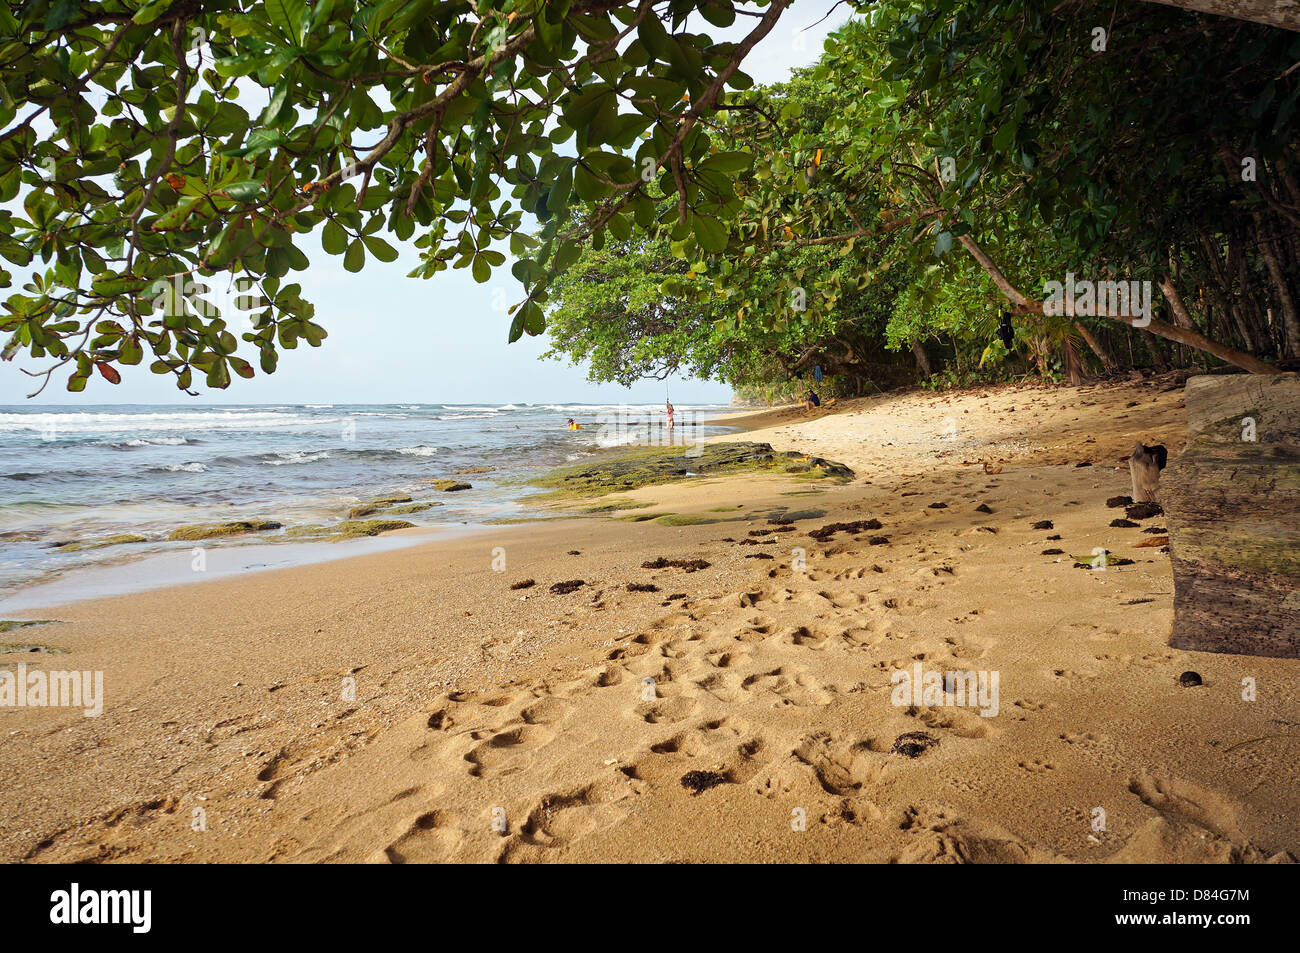 Tropical beach with lush vegetation, Caribbean, Manzanillo, Costa Rica Stock Photo